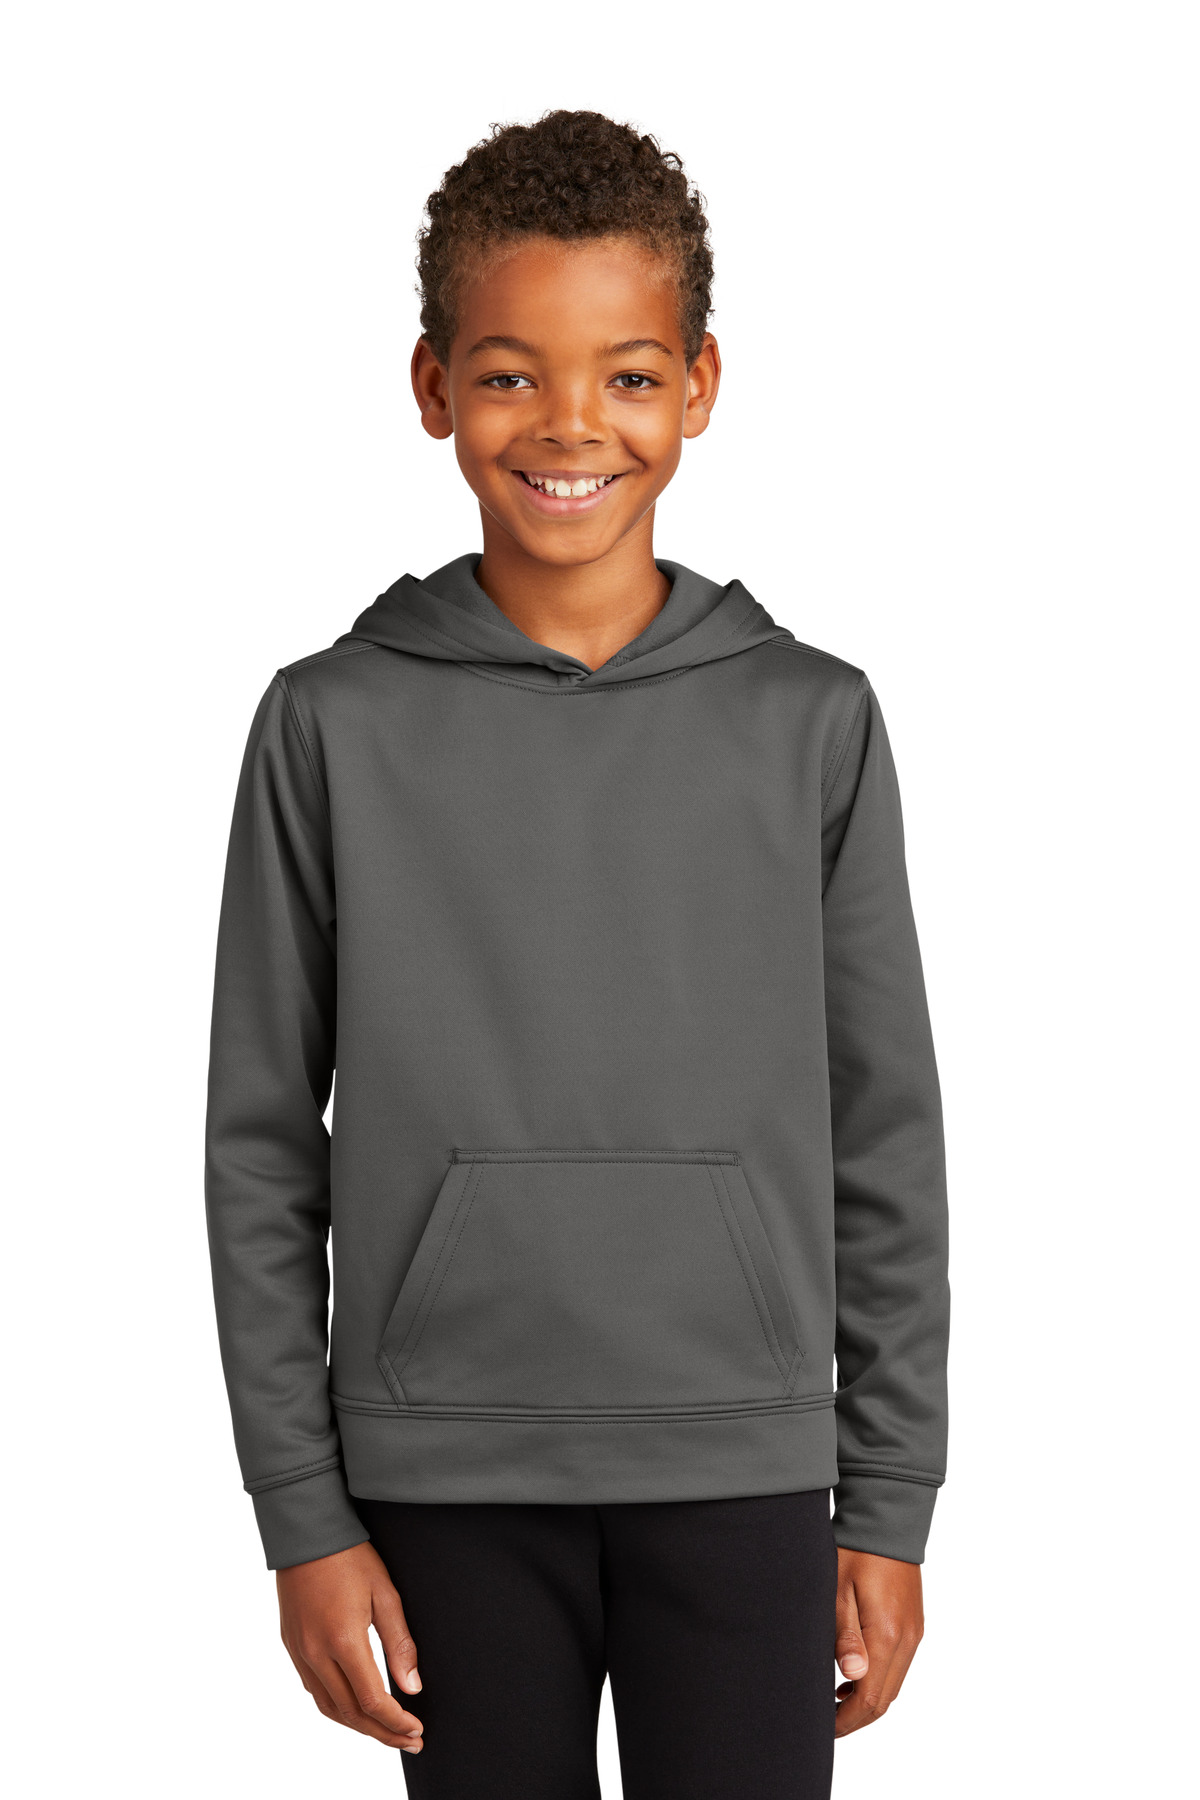 Port & Company Youth Sweatshirts & Fleece for Hospitality ®Youth Performance Fleece Pullover Hooded Sweatshirt.-Port & Company